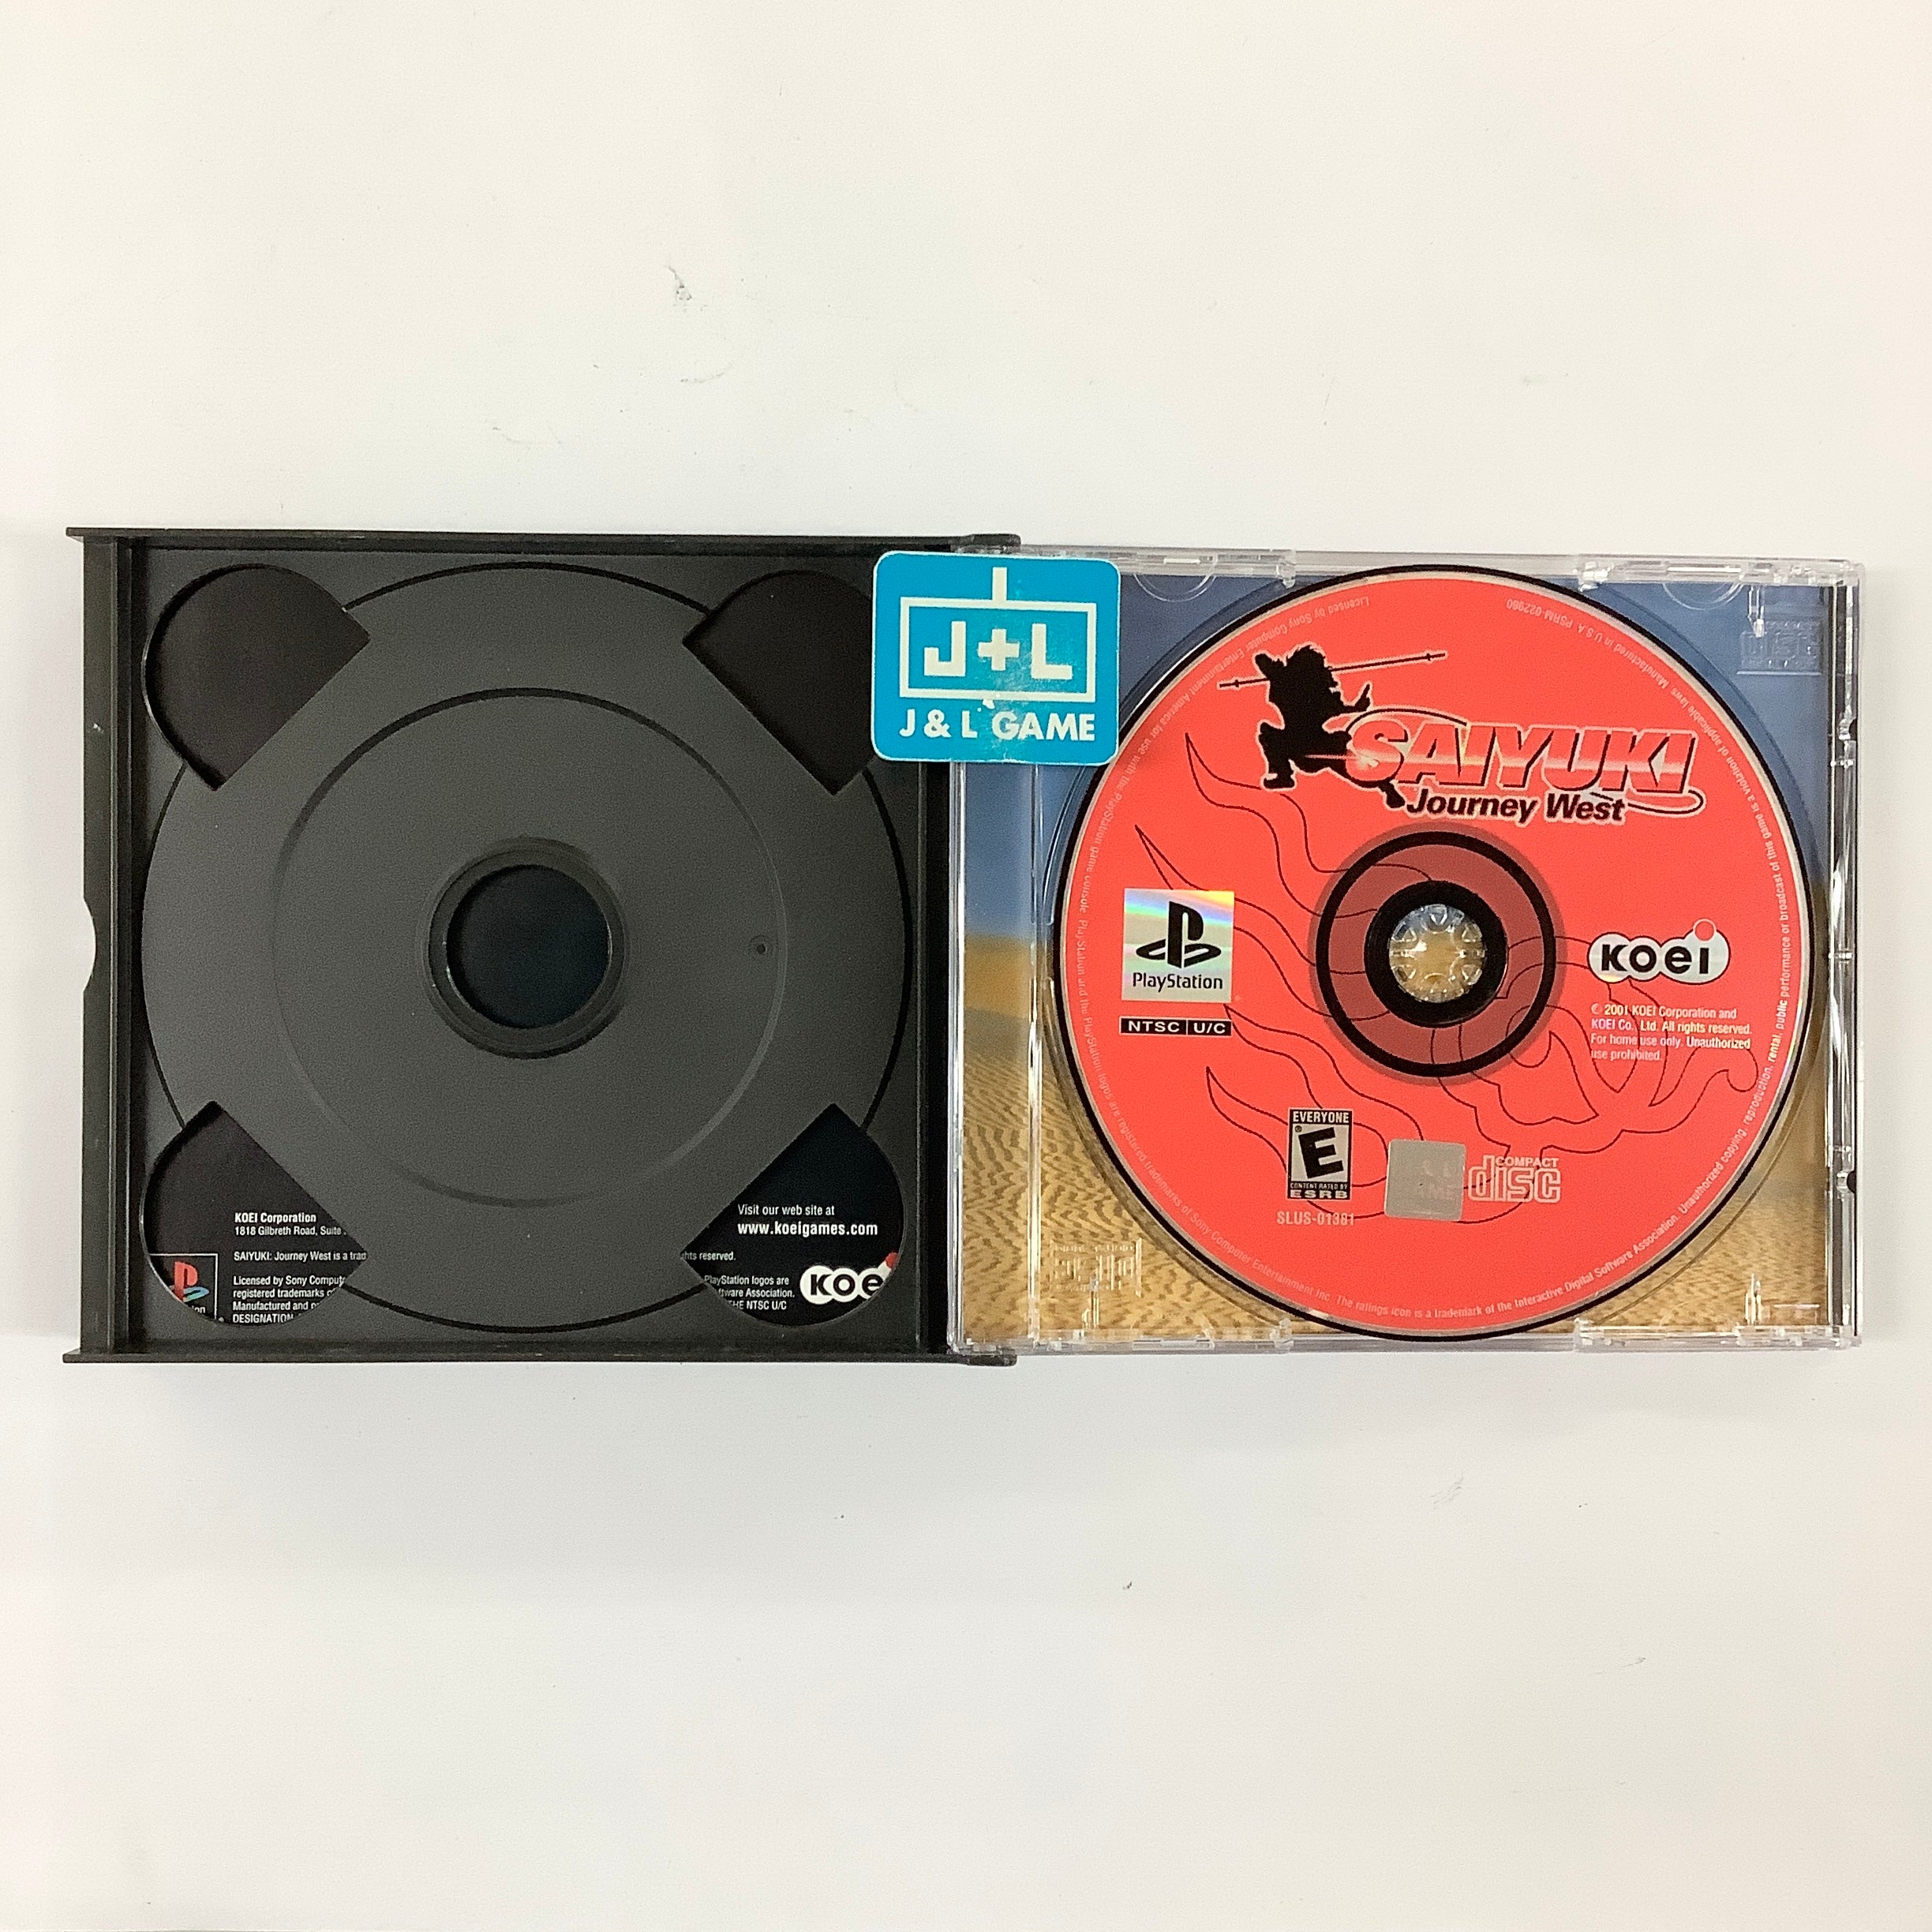 Saiyuki: Journey West - (PS1) PlayStation 1 [Pre-Owned] Video Games Koei   